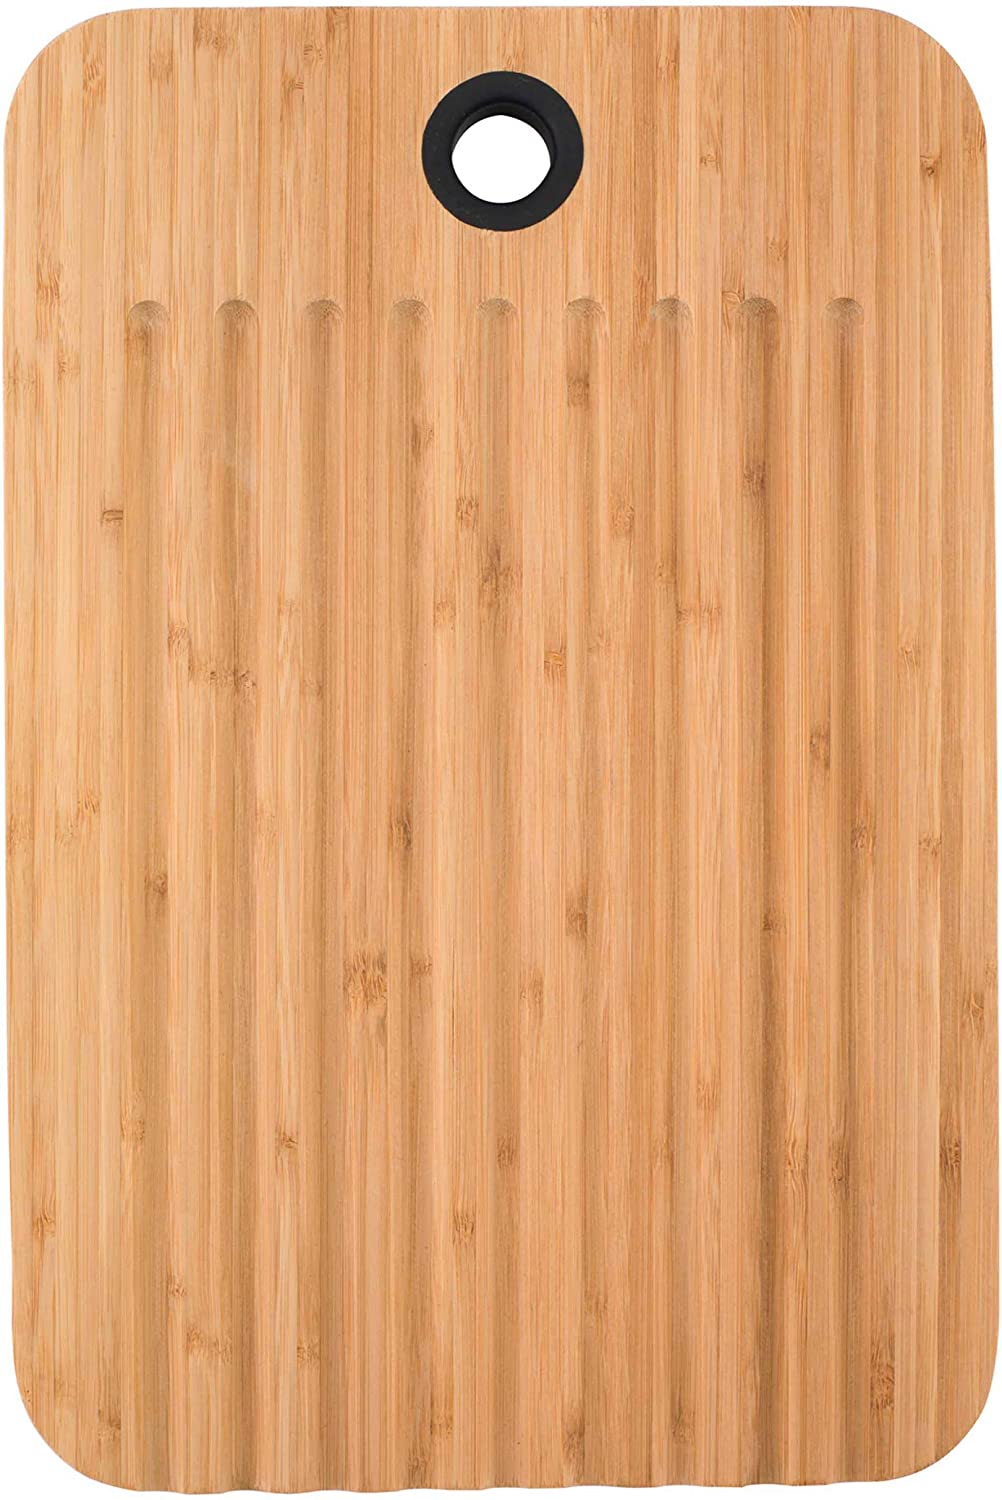 Sambonet 1304716 Bamboo Chopping Board with Hooks 36 x 24 cm